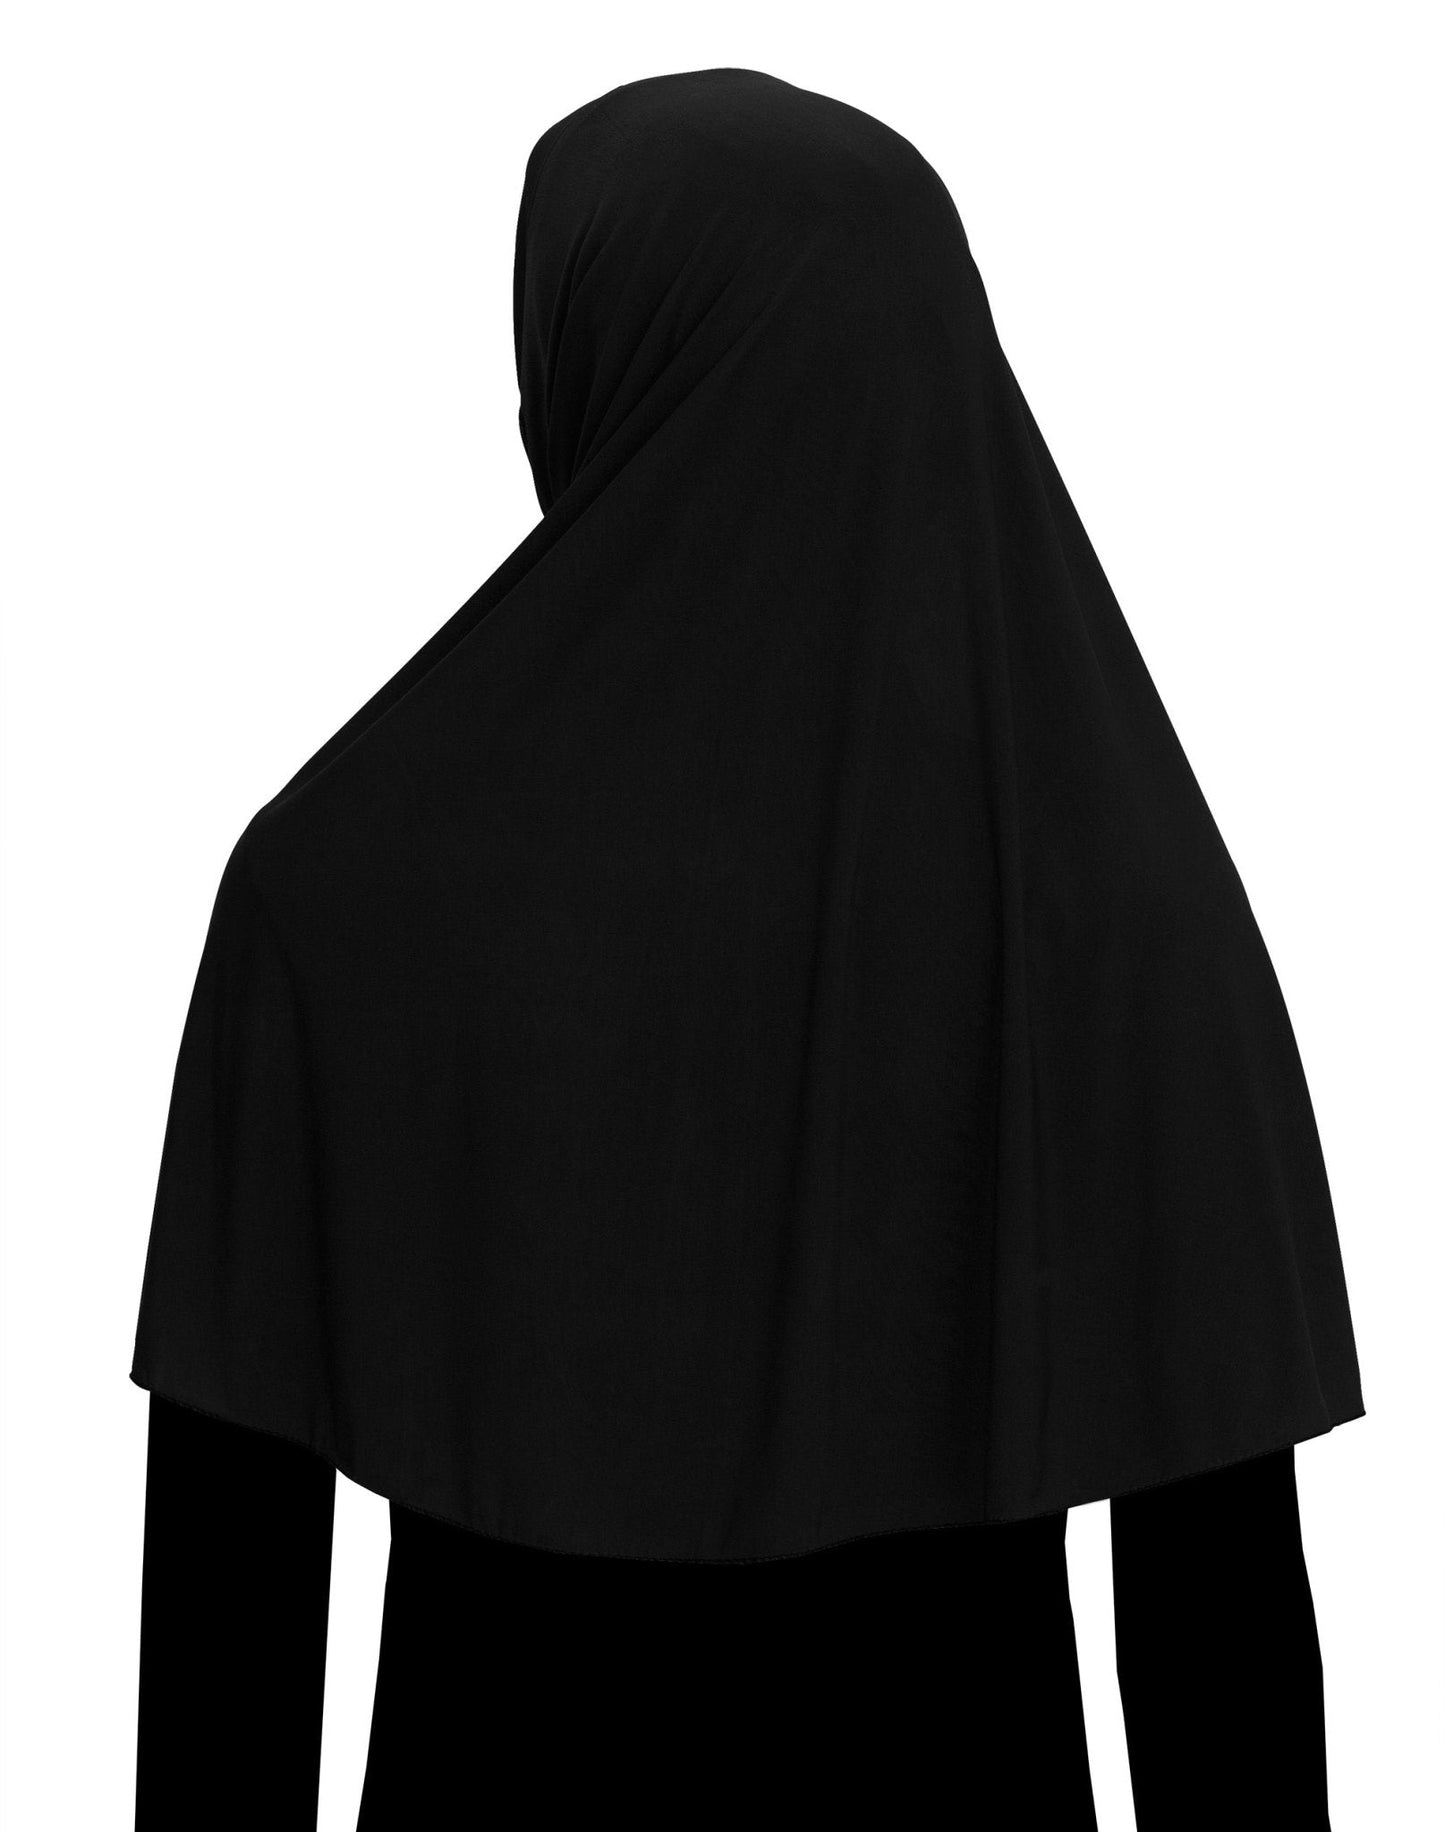 black khimar hijab amira one piece easy pull on headscarf elbow length 